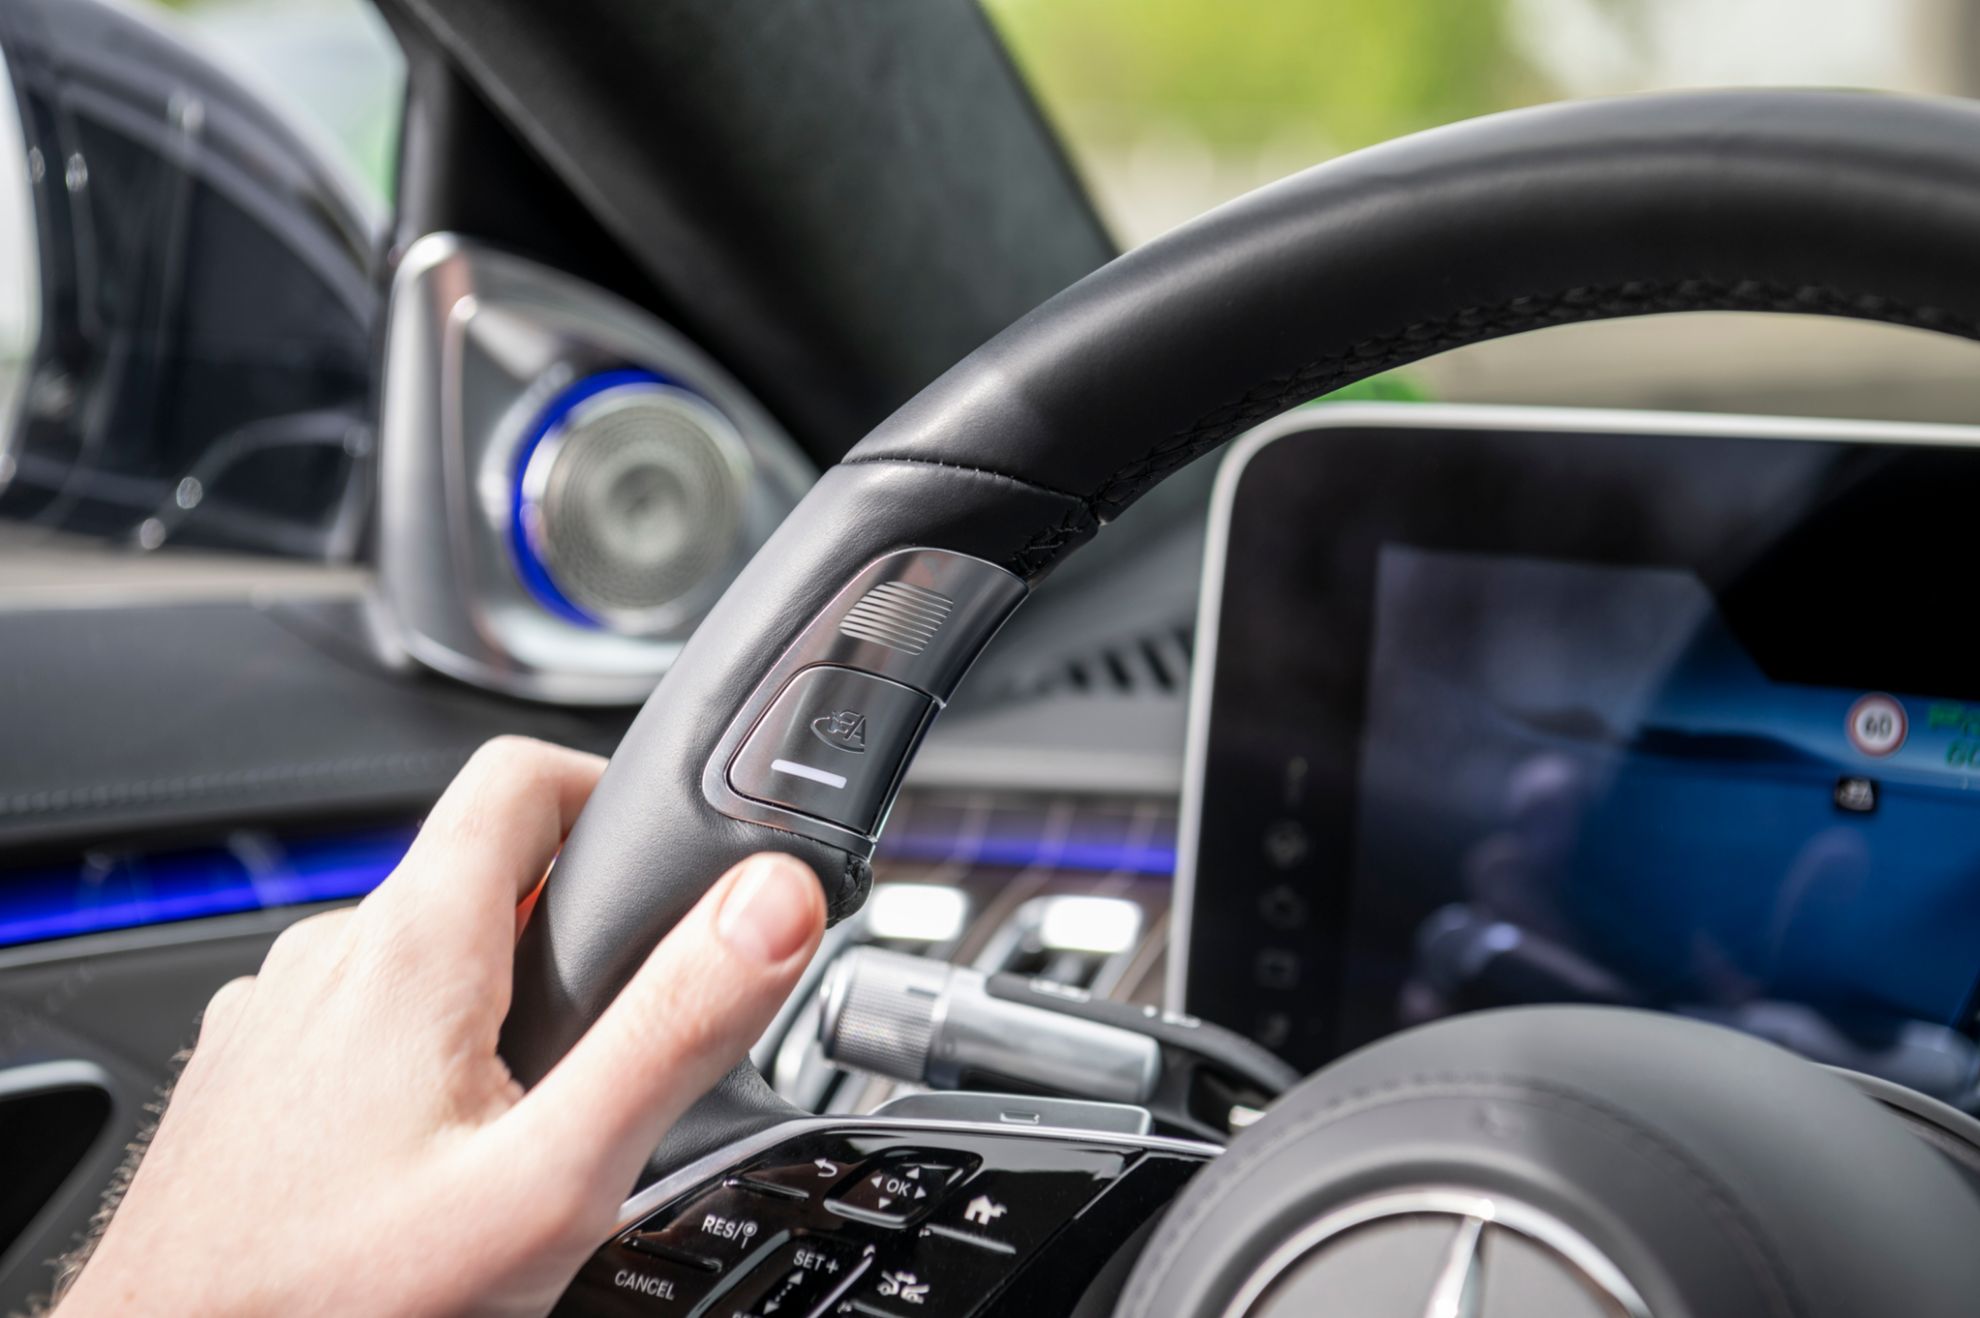 Drive Pilot - Mercedes-Benz - Clase S - conudccion autonoma nivel 3 - coche robor